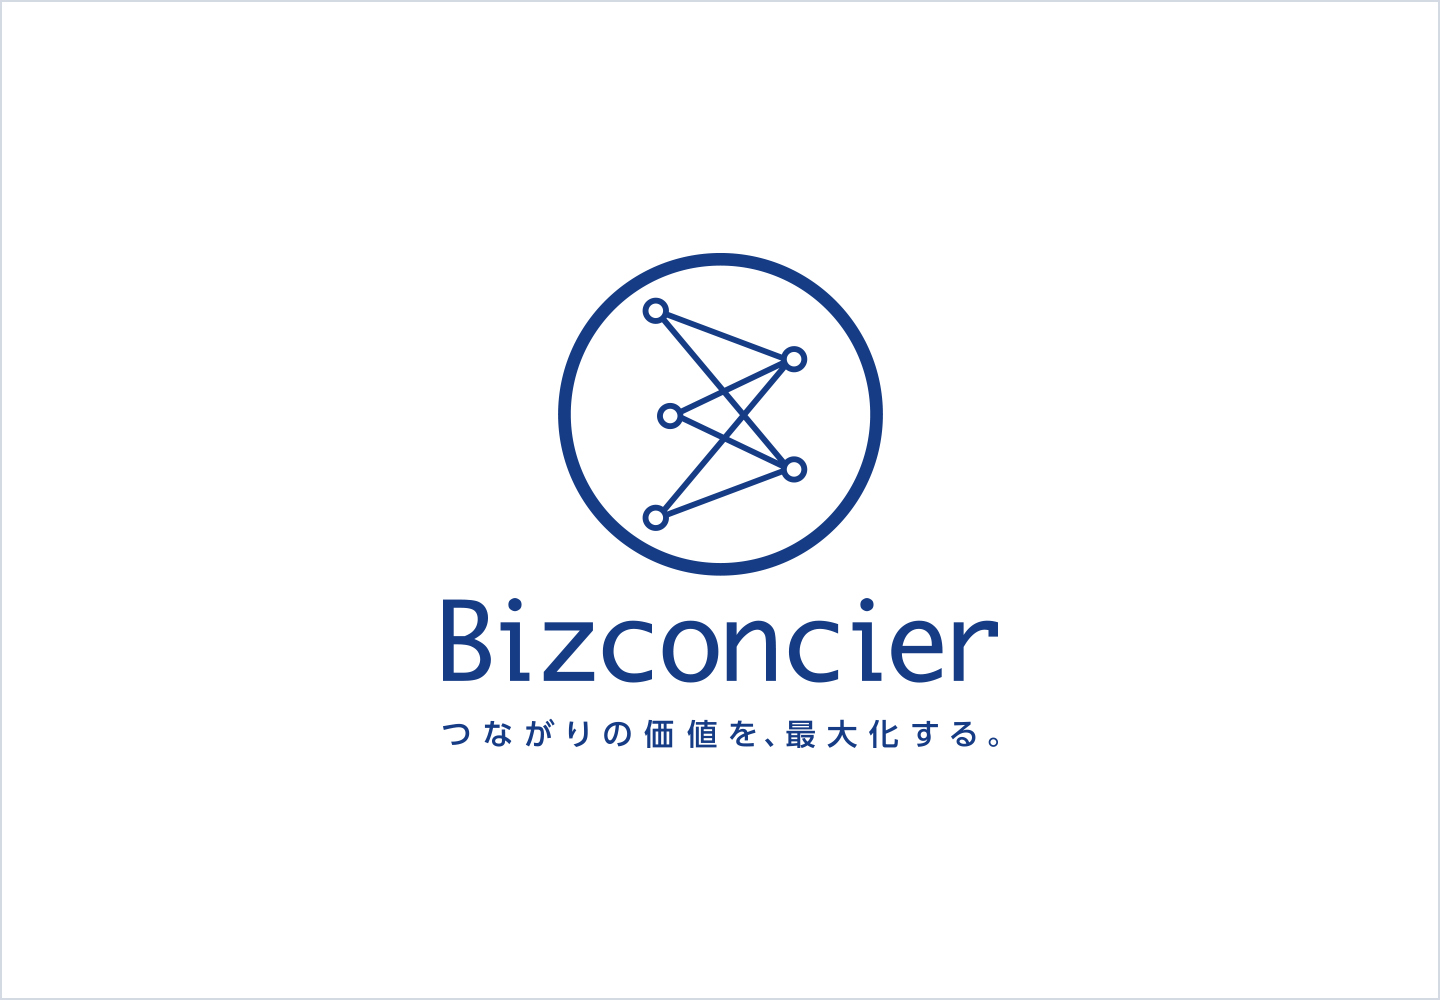 Bizconcier 企業理念および企業ロゴを発表 コーポレートサイト全面リニューアル 株式会社bizconcier ビズコンシェル